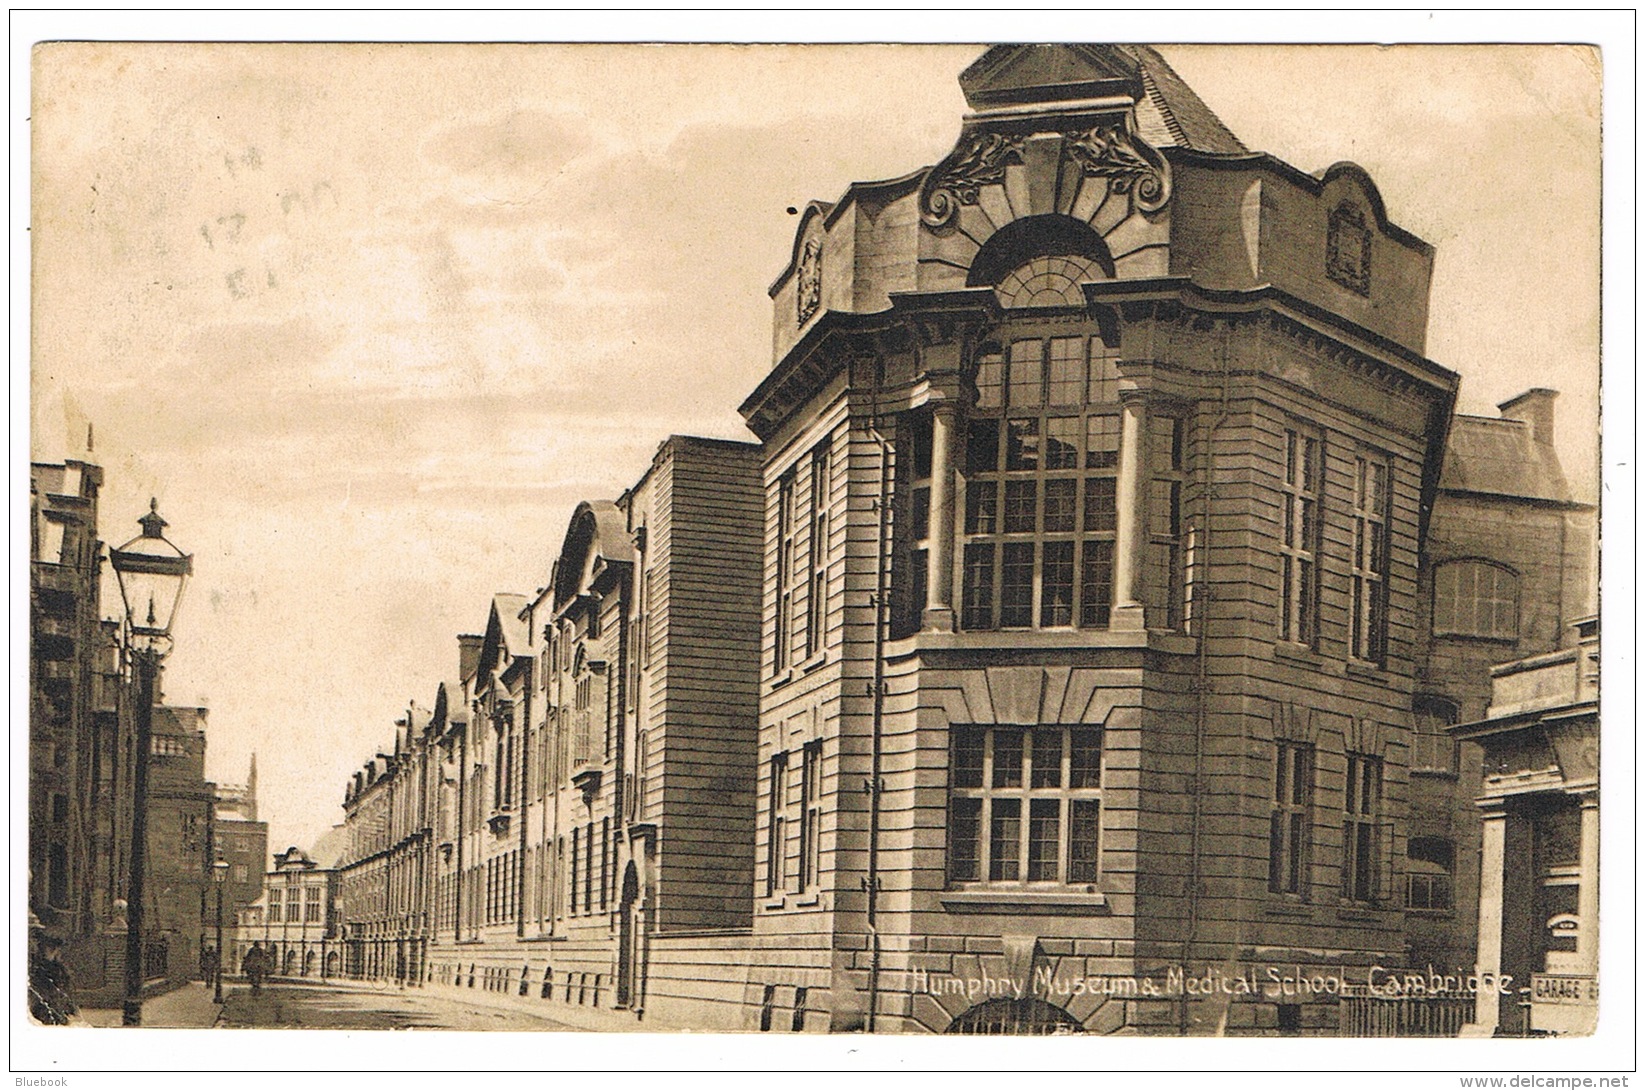 RB 1133 - 1914 Postcard - Humphry Museum &amp; Medical School - Cambridge - Cambridge